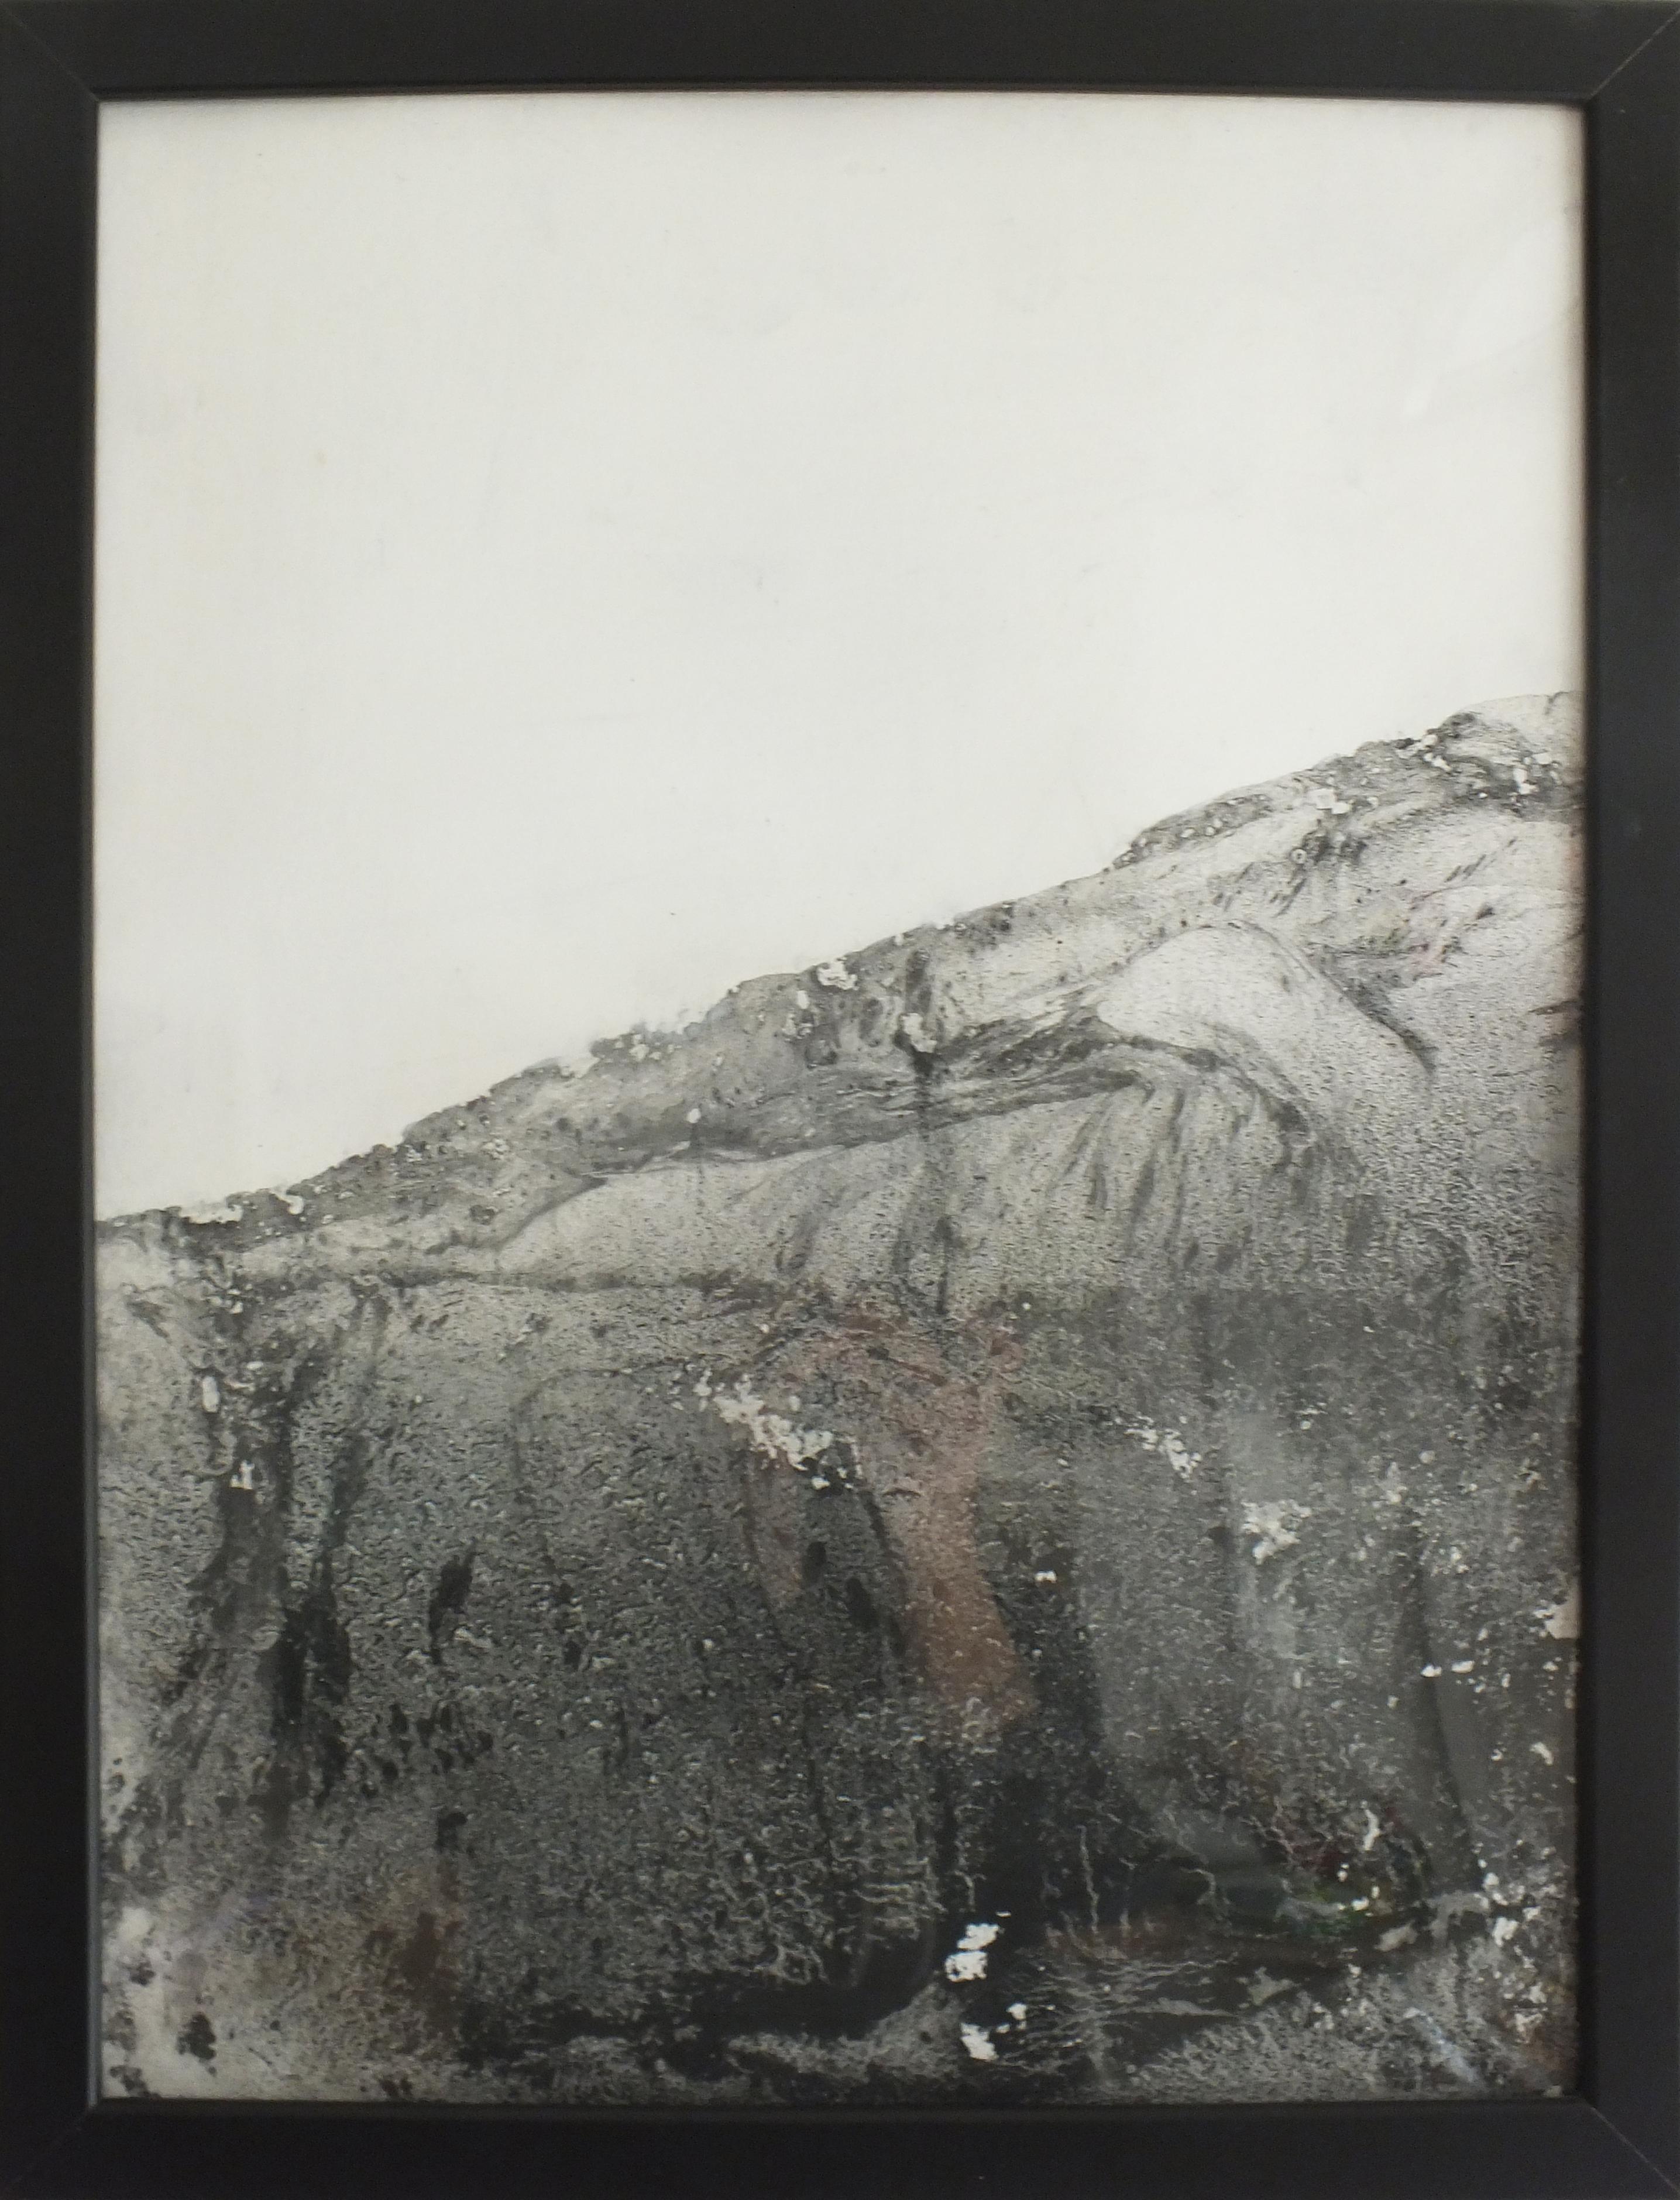 Landscape Art Marilina Marchica - "Landscape BW" Dessin contemporain en noir et blanc Made in Italy